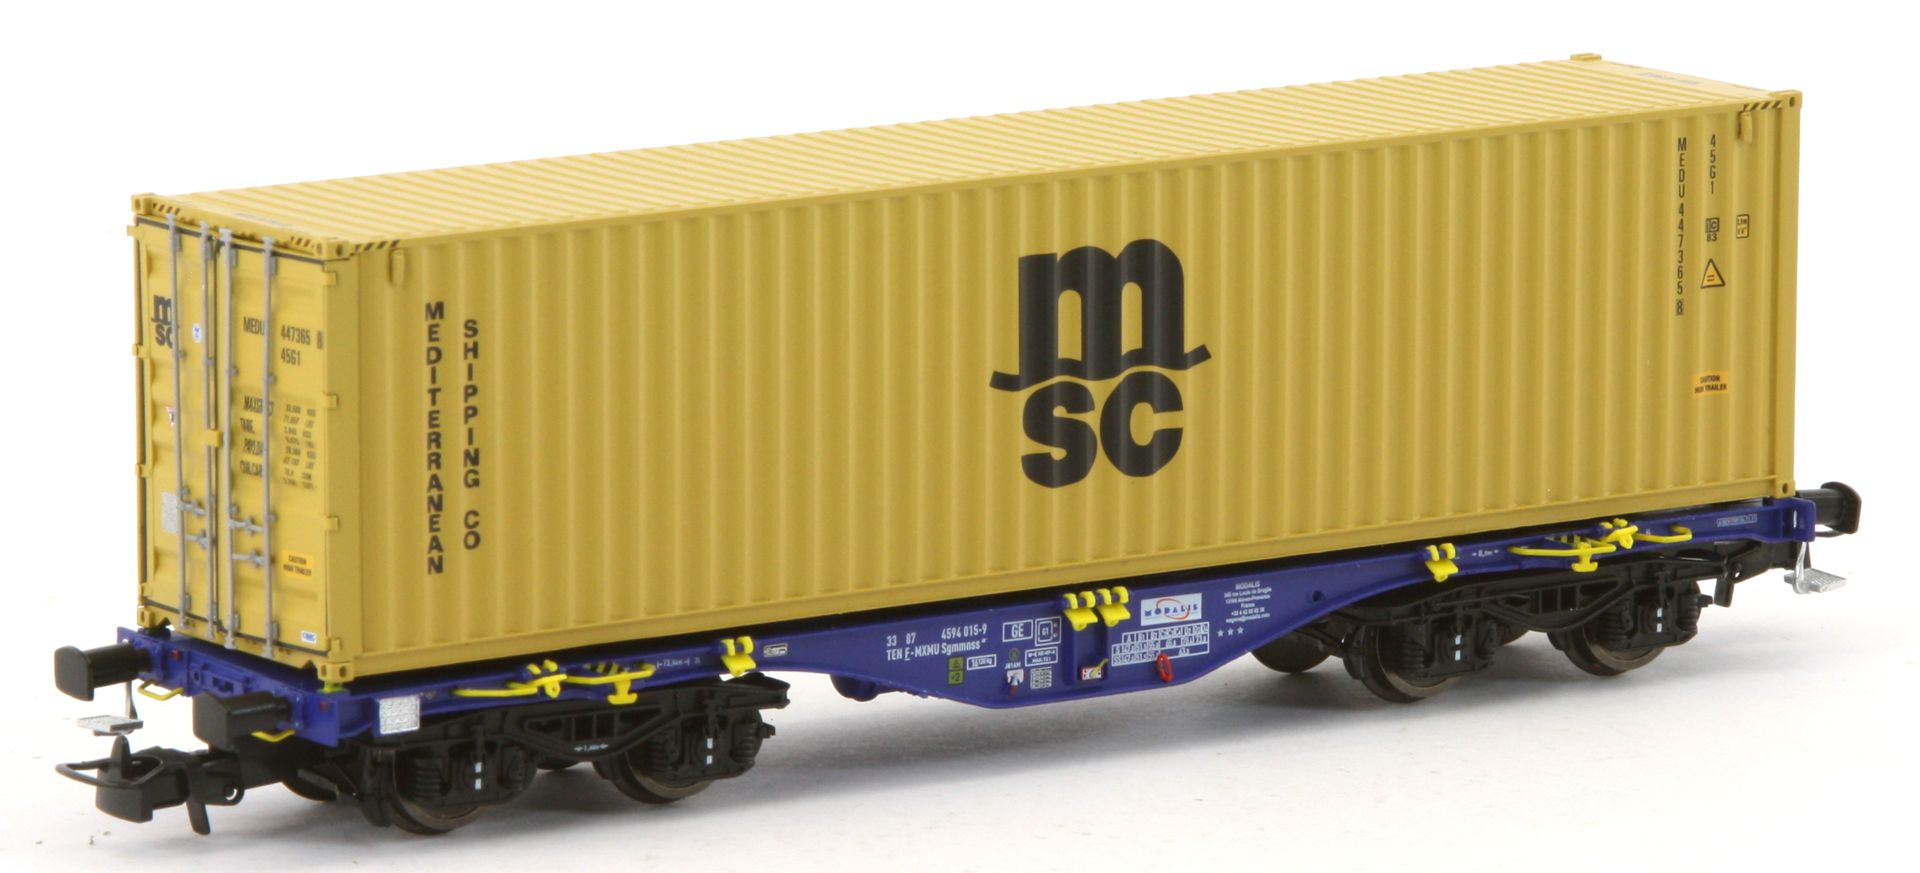 PT-Trains 100262 - Containertragwagen Sgmmnss mit Container 'MSC', Modalis, Ep.VI